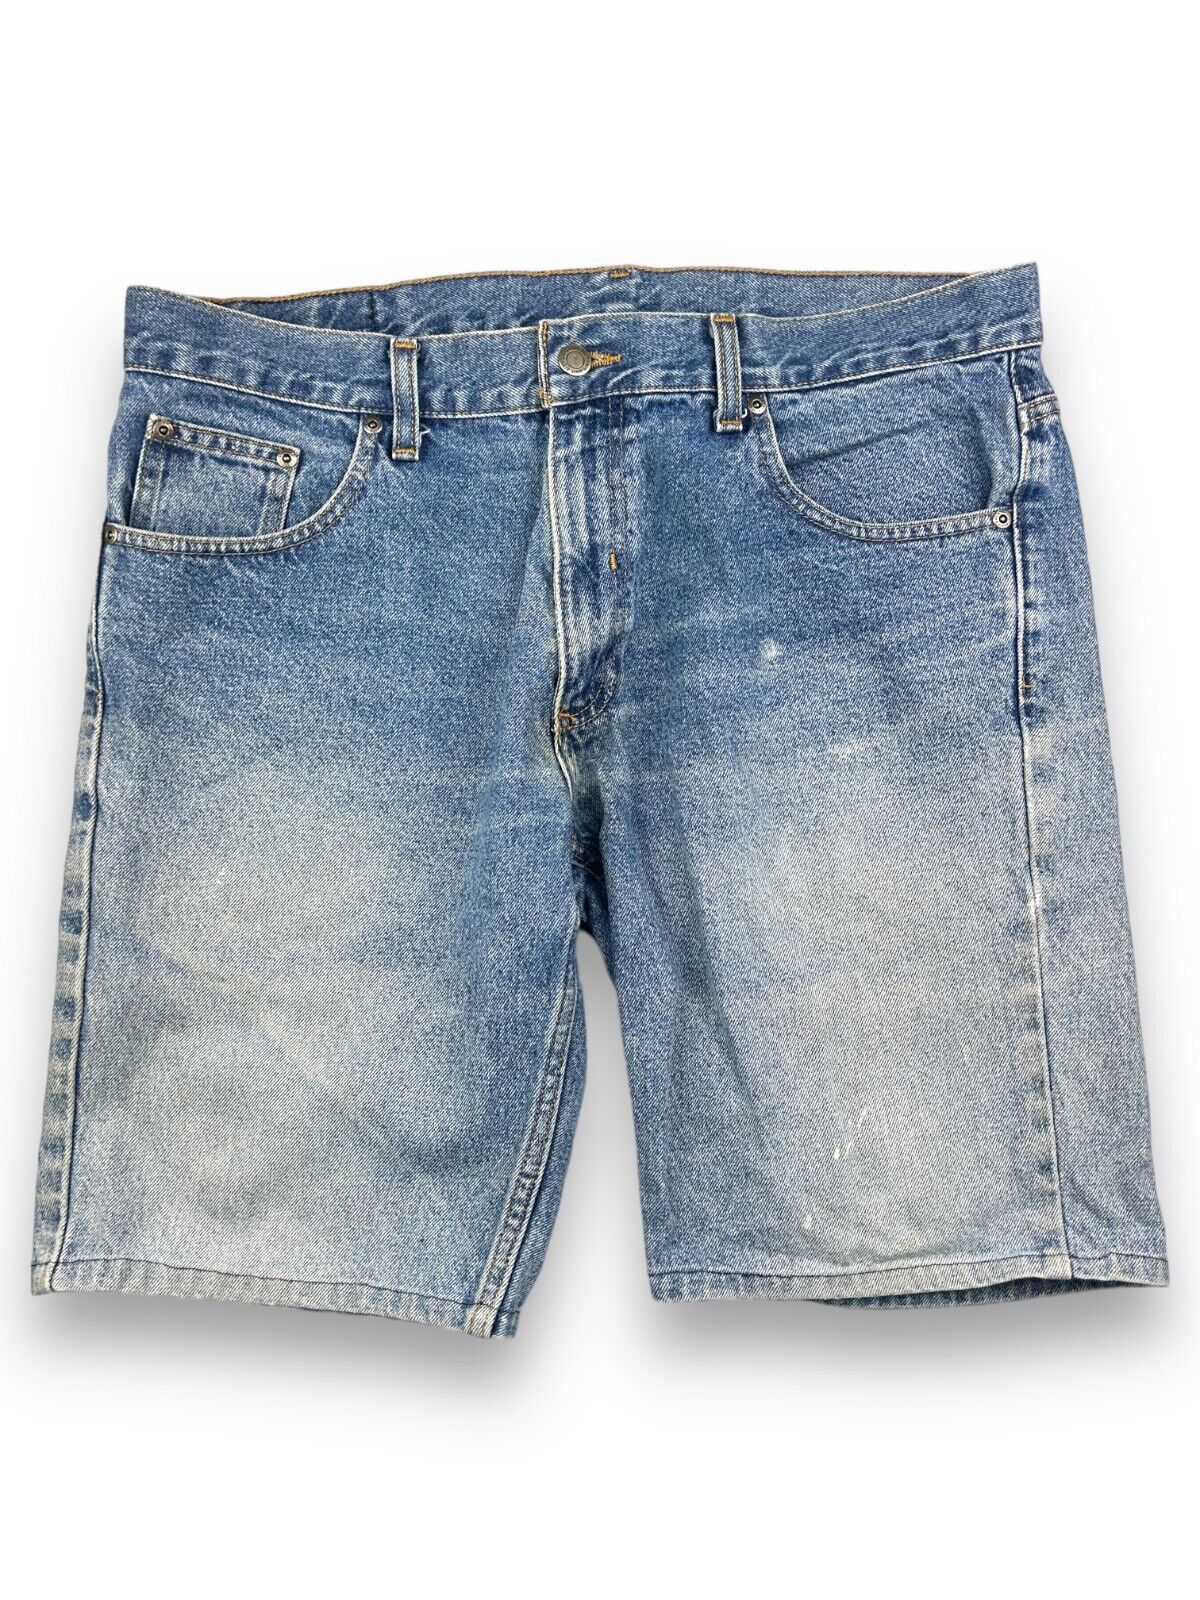 Vintage Members Mark Light Wash Denim Jorts Shorts Size 36W